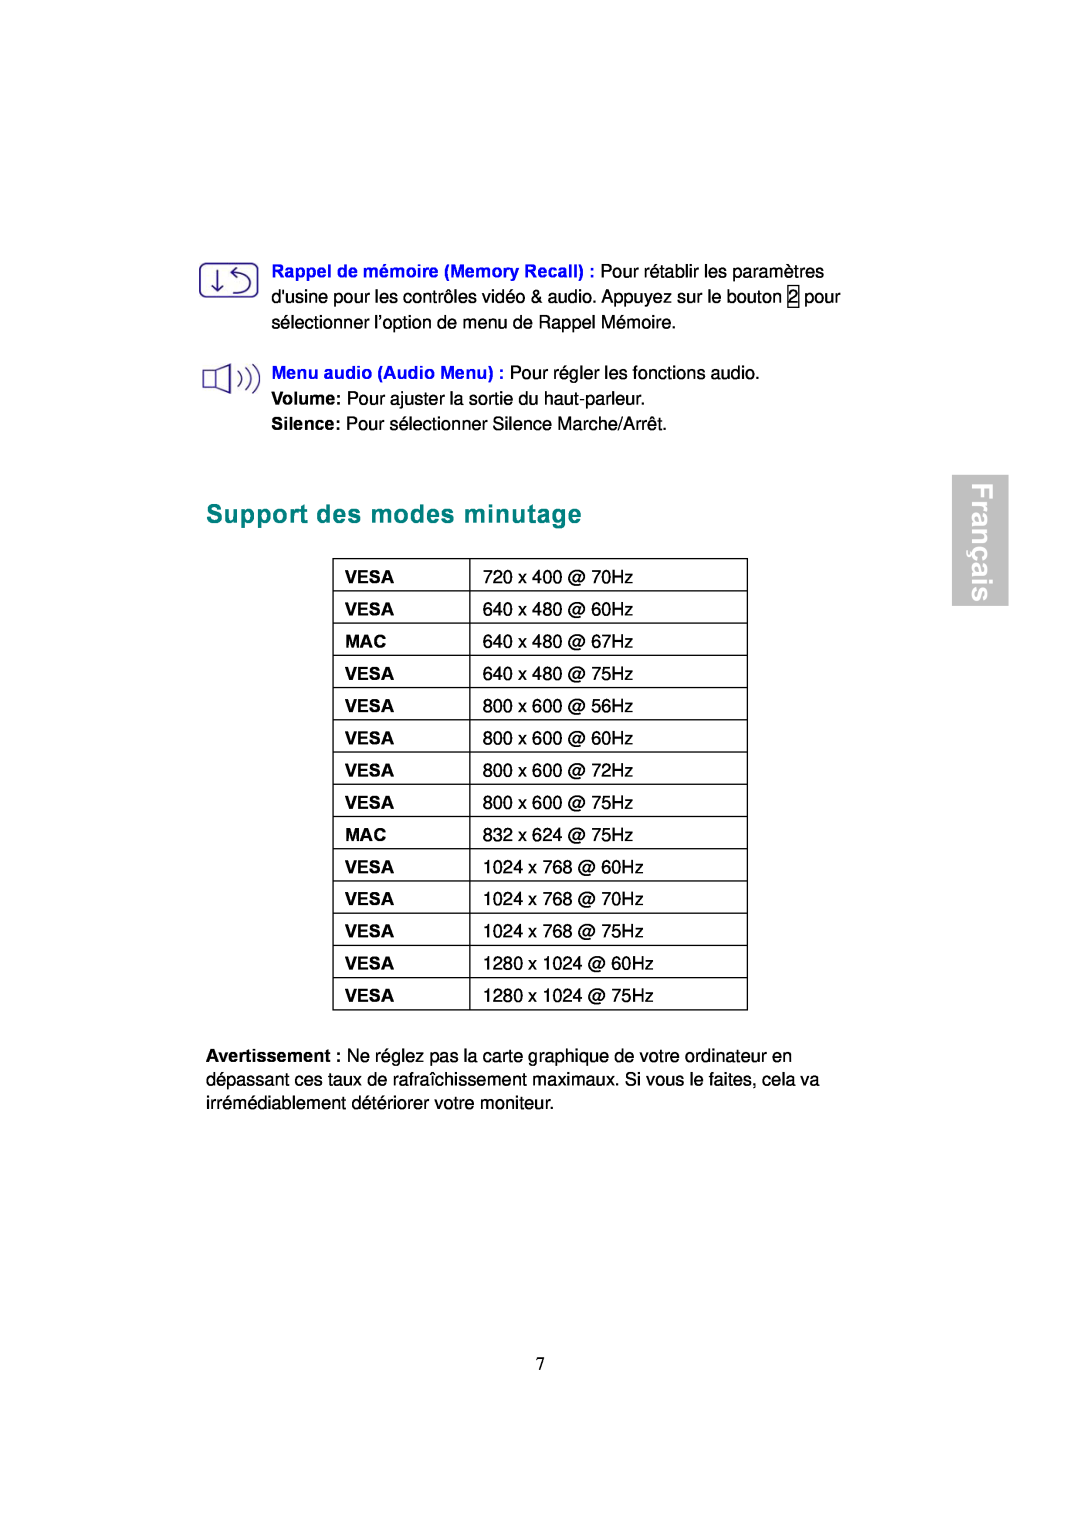 AOC 177Sa-1 manual Support des modes minutage, Français 